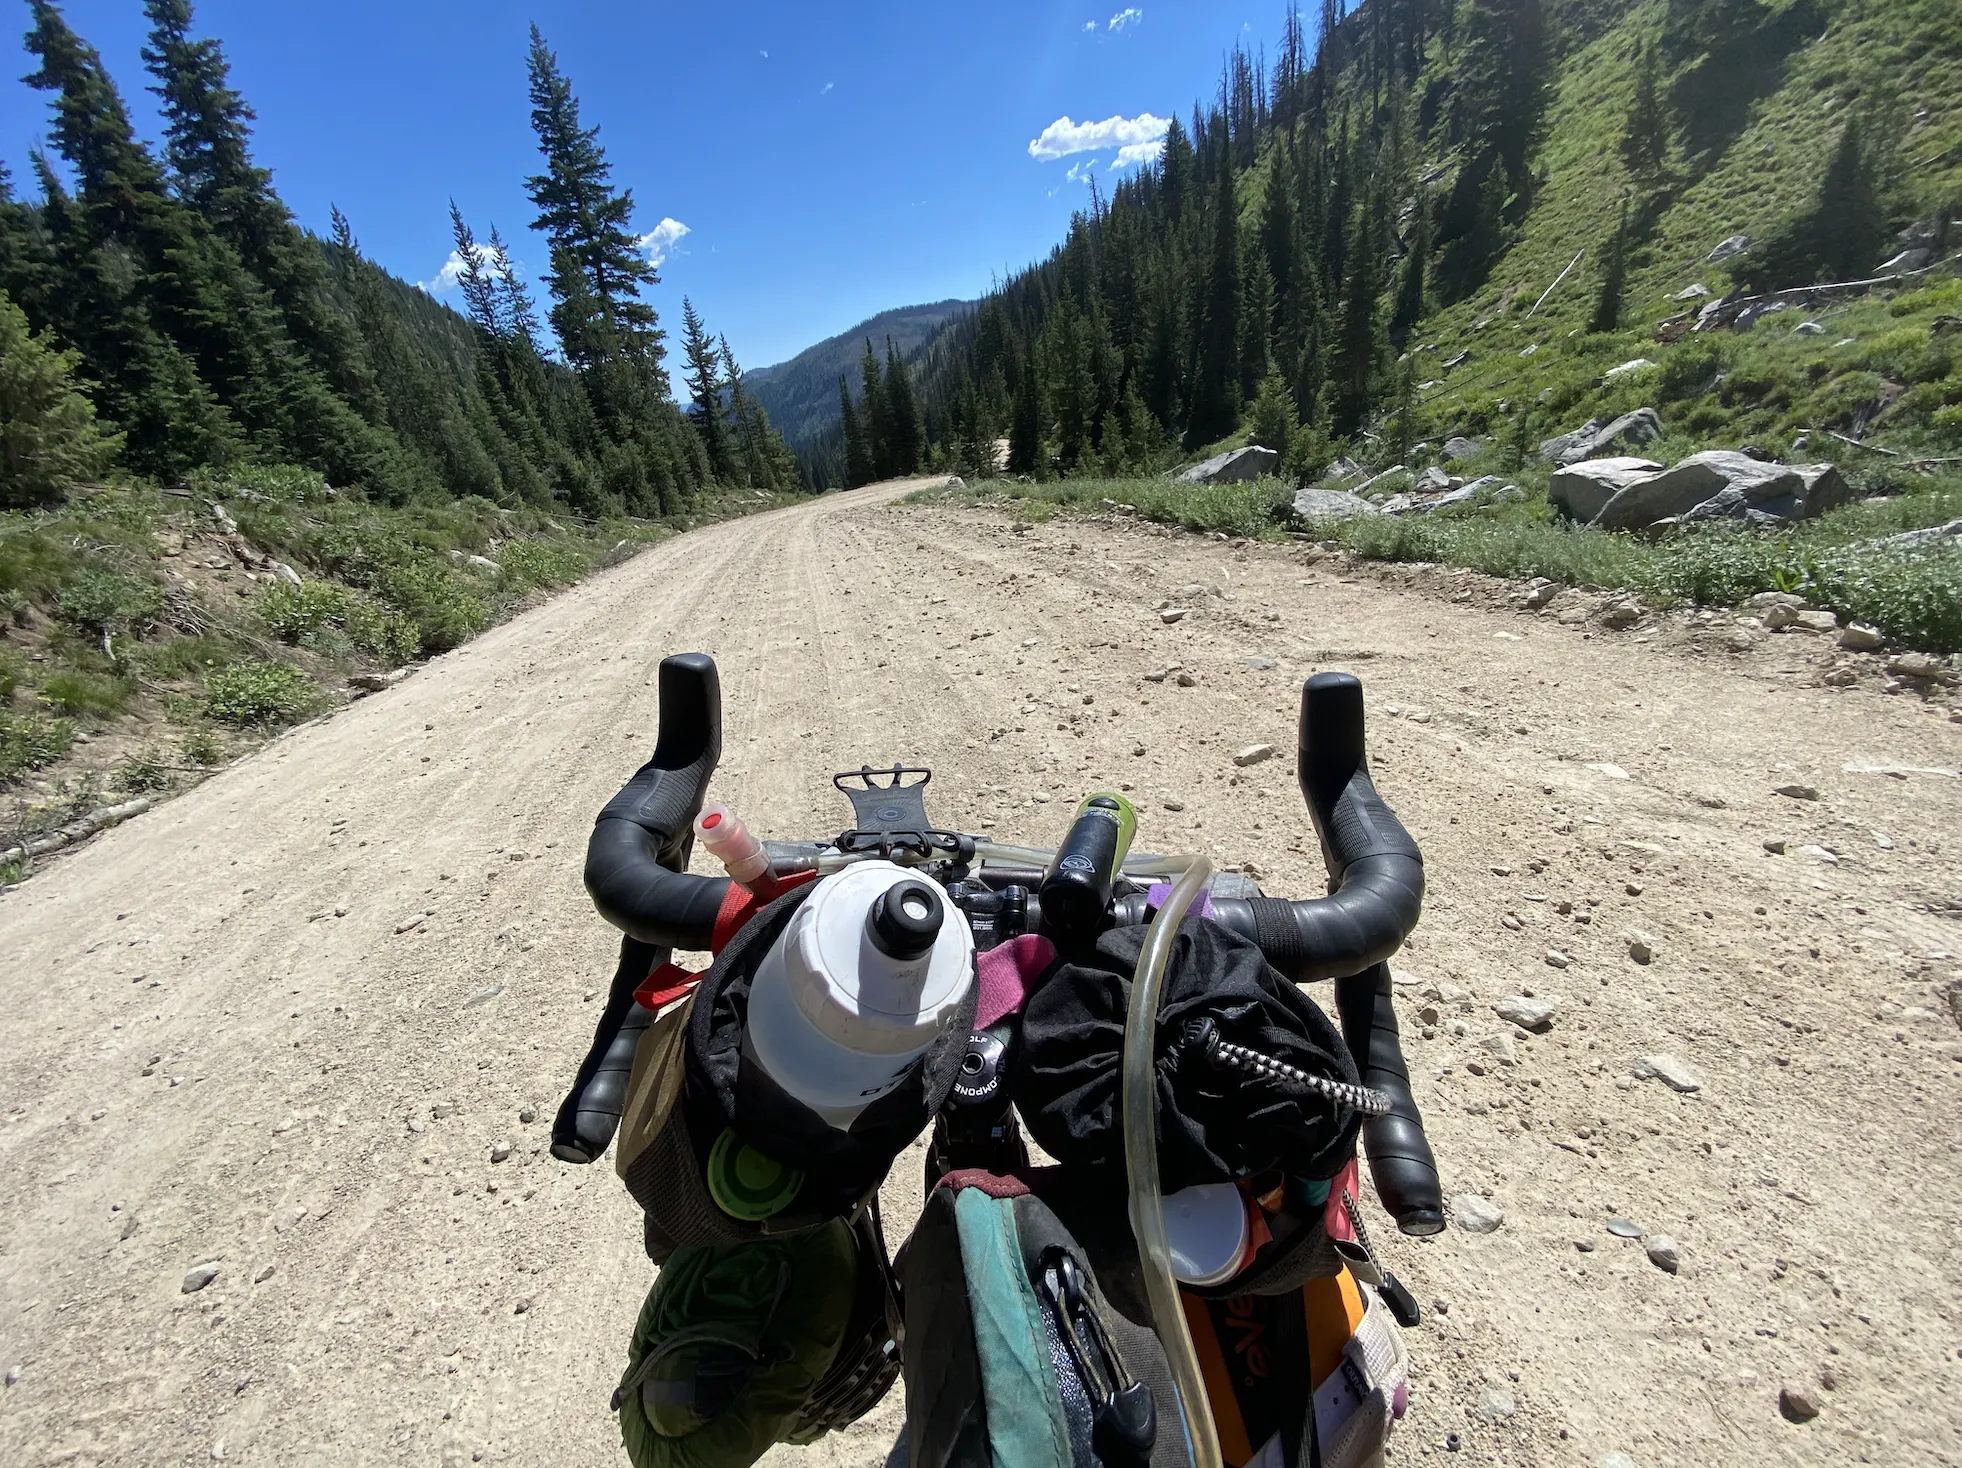 Kira Minehart reflects on climate change as she rides her Otso Cycles Waheela C gravel bike in Idaho.